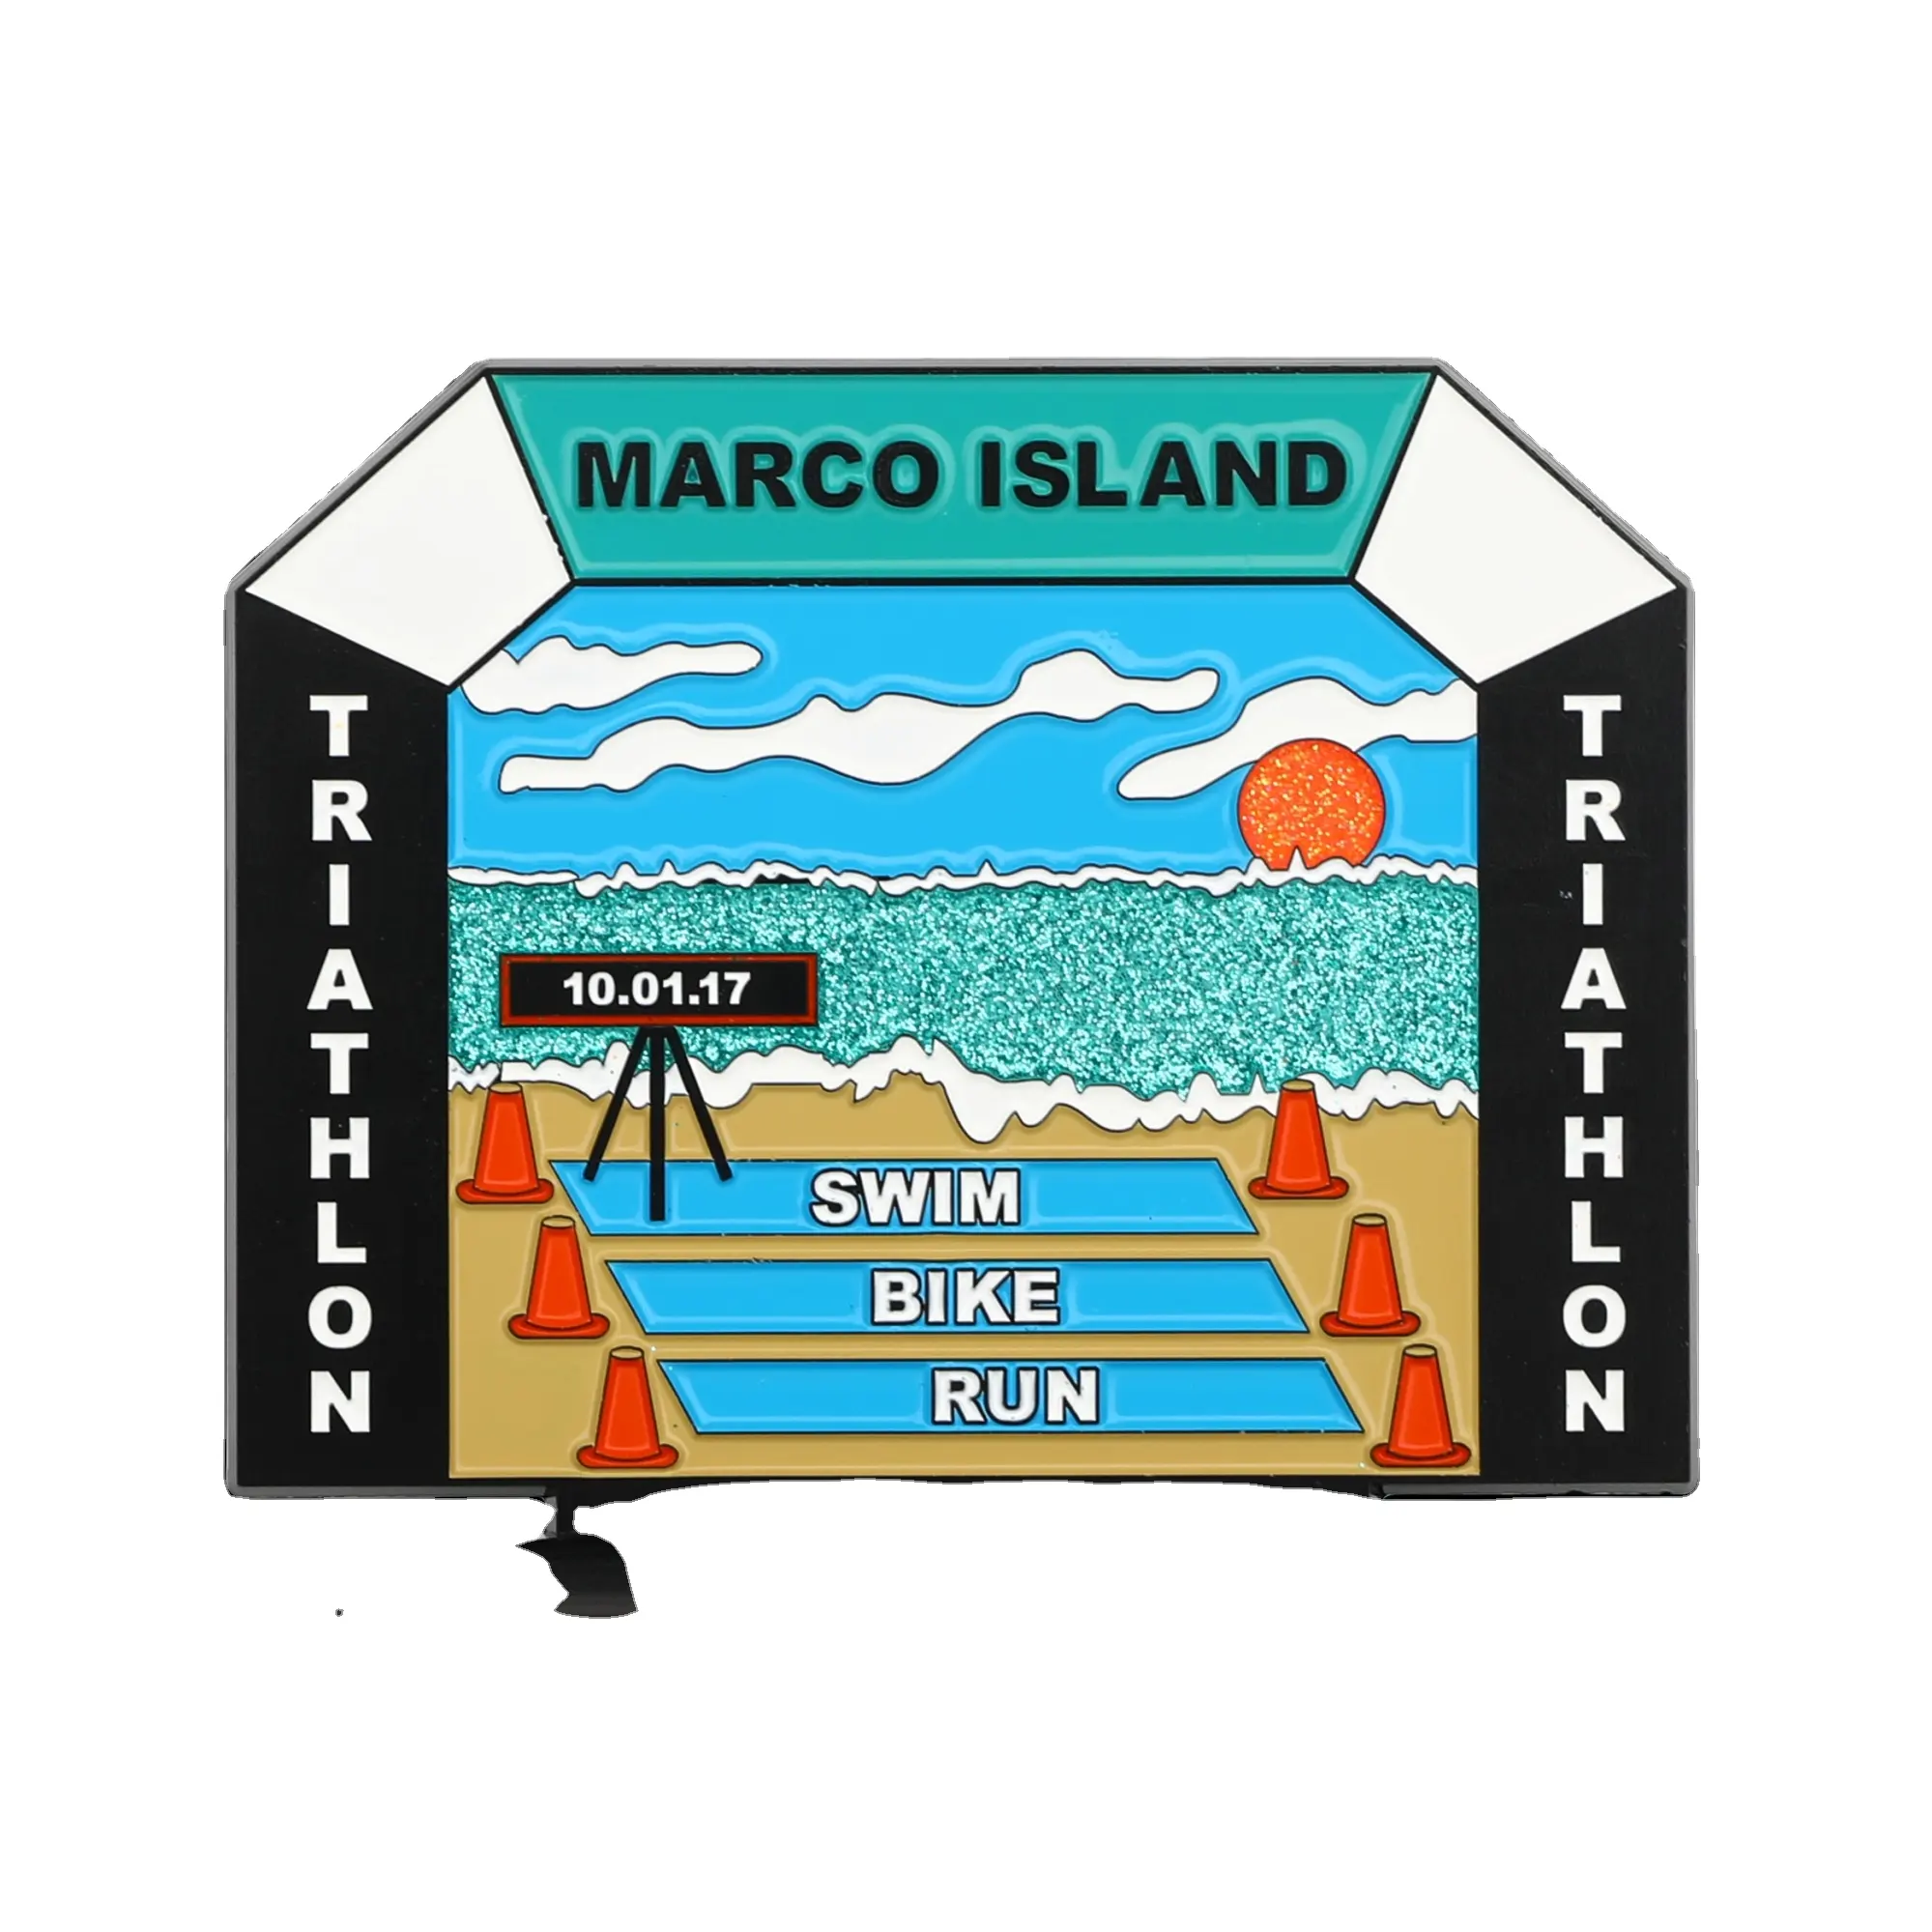 Aangepaste Triathlon Revers Pin Bike Swim Run Triathlete Marathon Tie Tack Marco Island, Usa